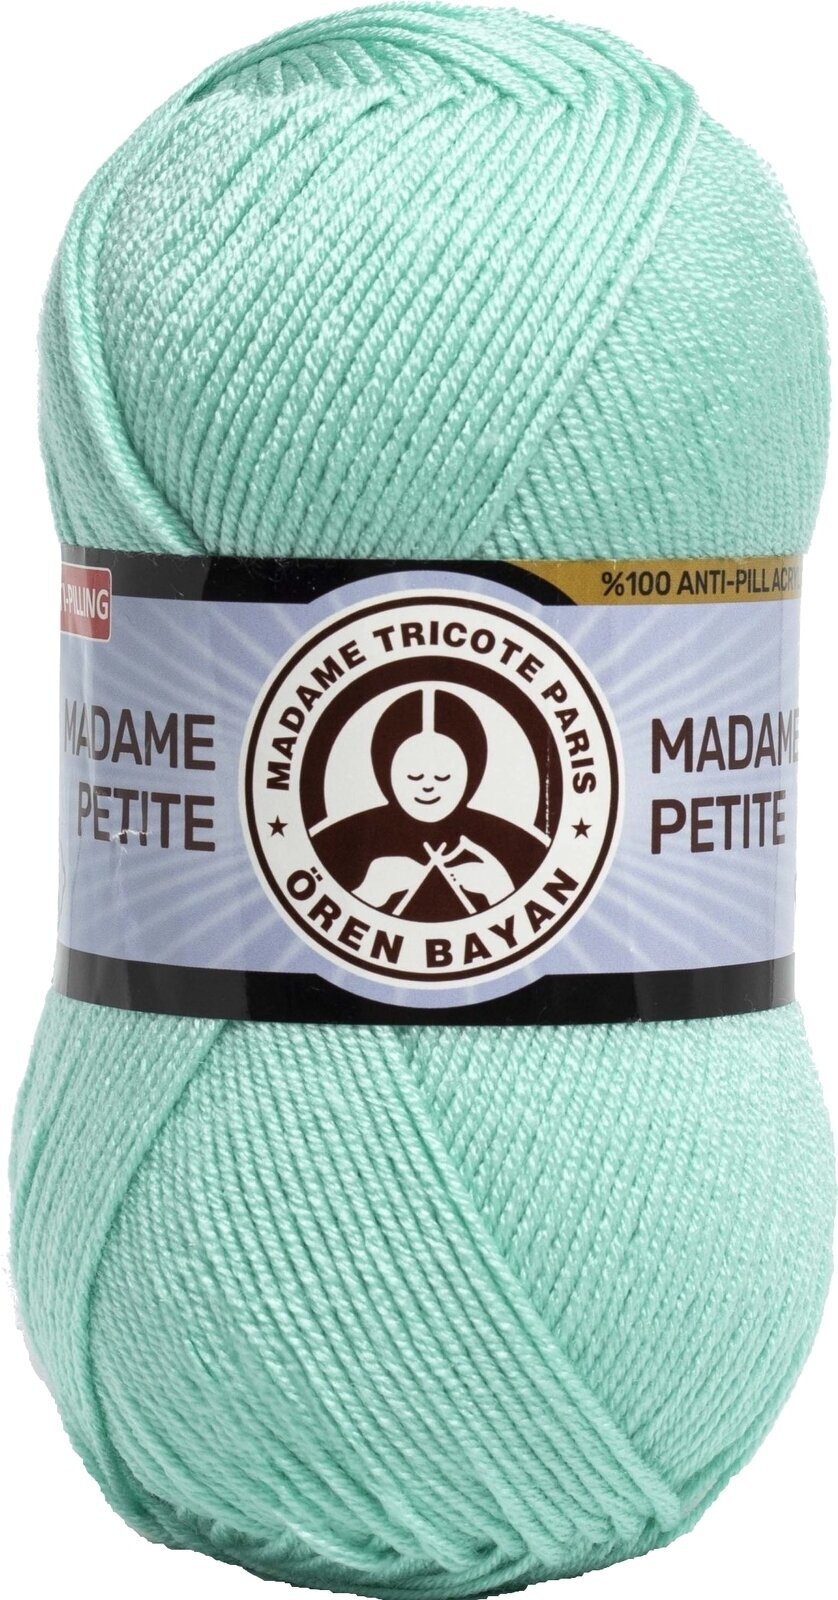 Fire de tricotat Madame Tricote Paris Madame Petite 3848 140 Fire de tricotat